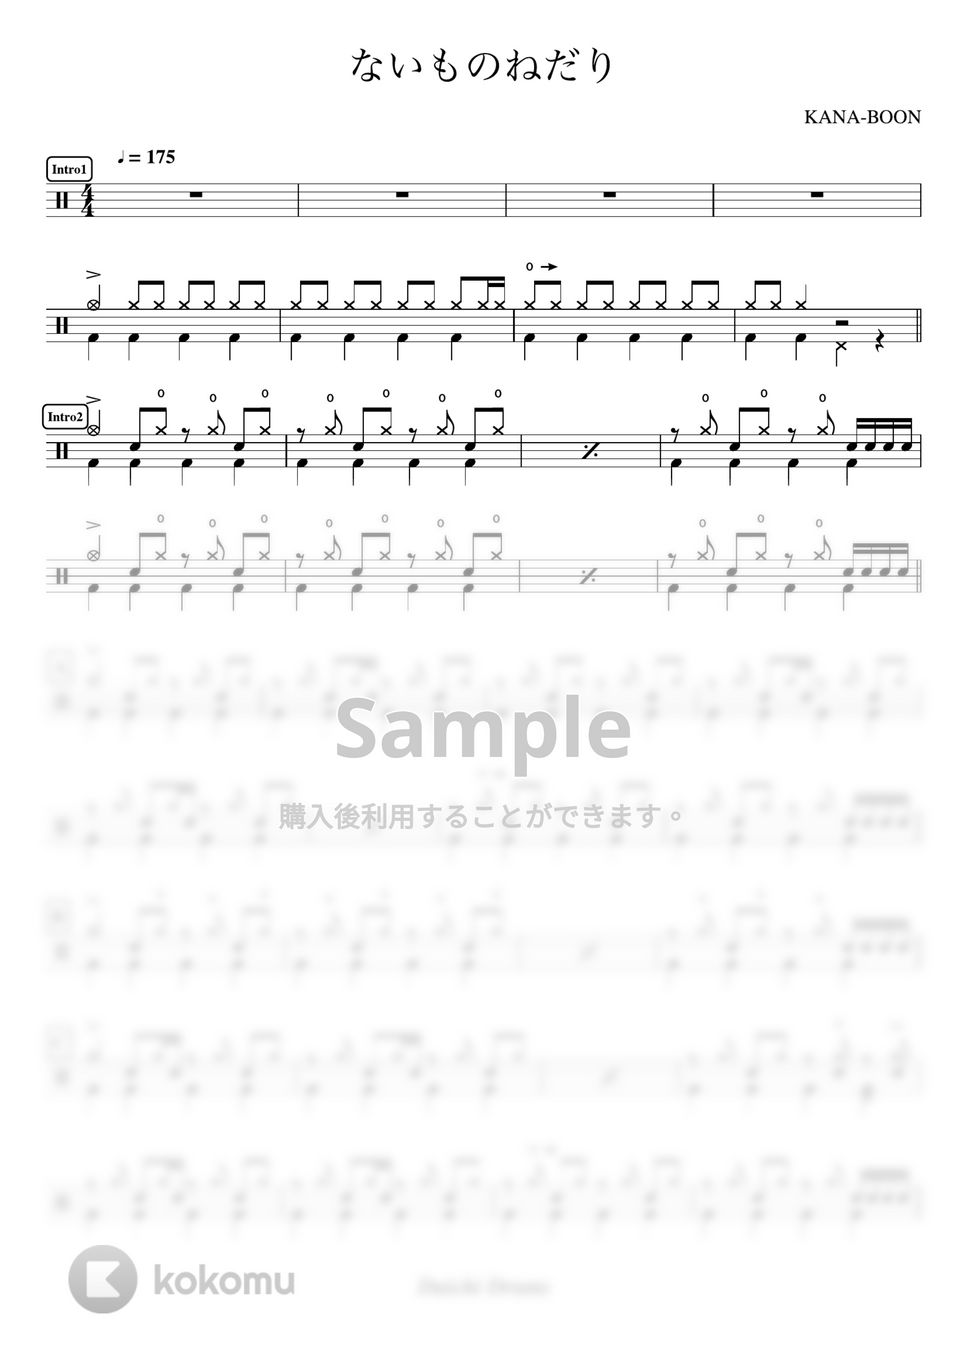 KANA-BOON - ないものねだり by Daichi Drums